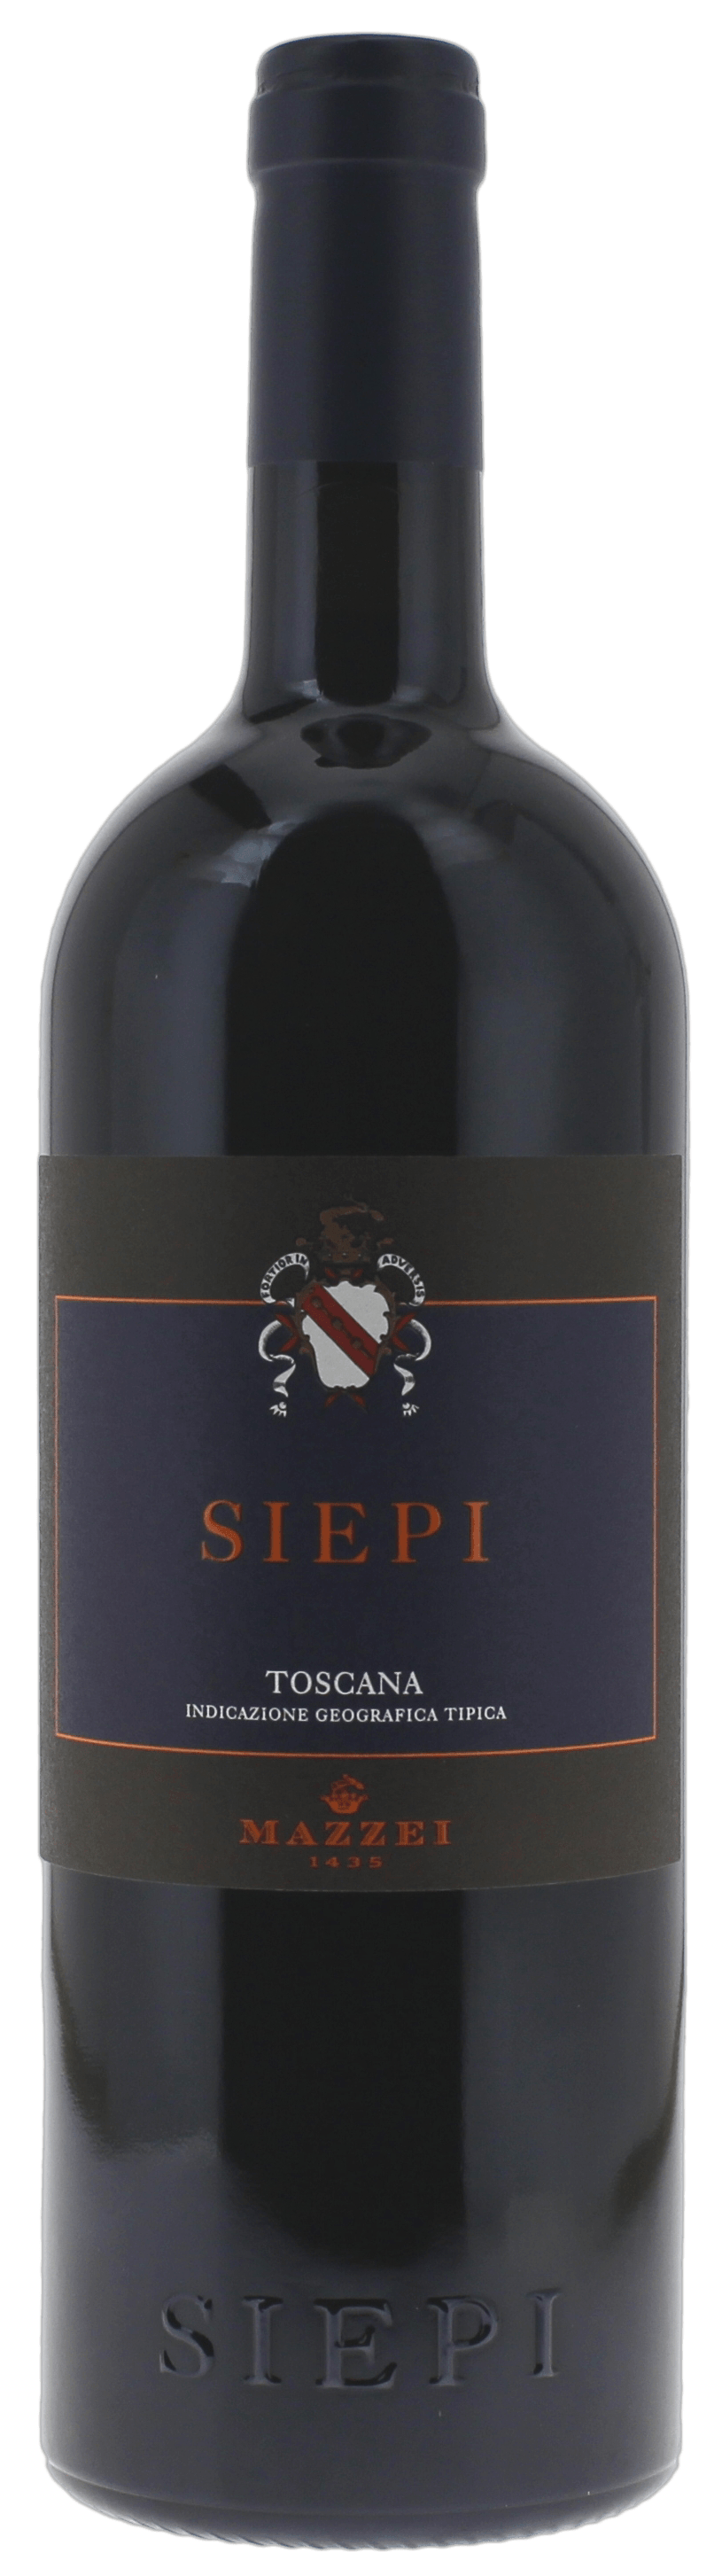 Siepi-mazzei-toscana 2020  Italie, Vin italien